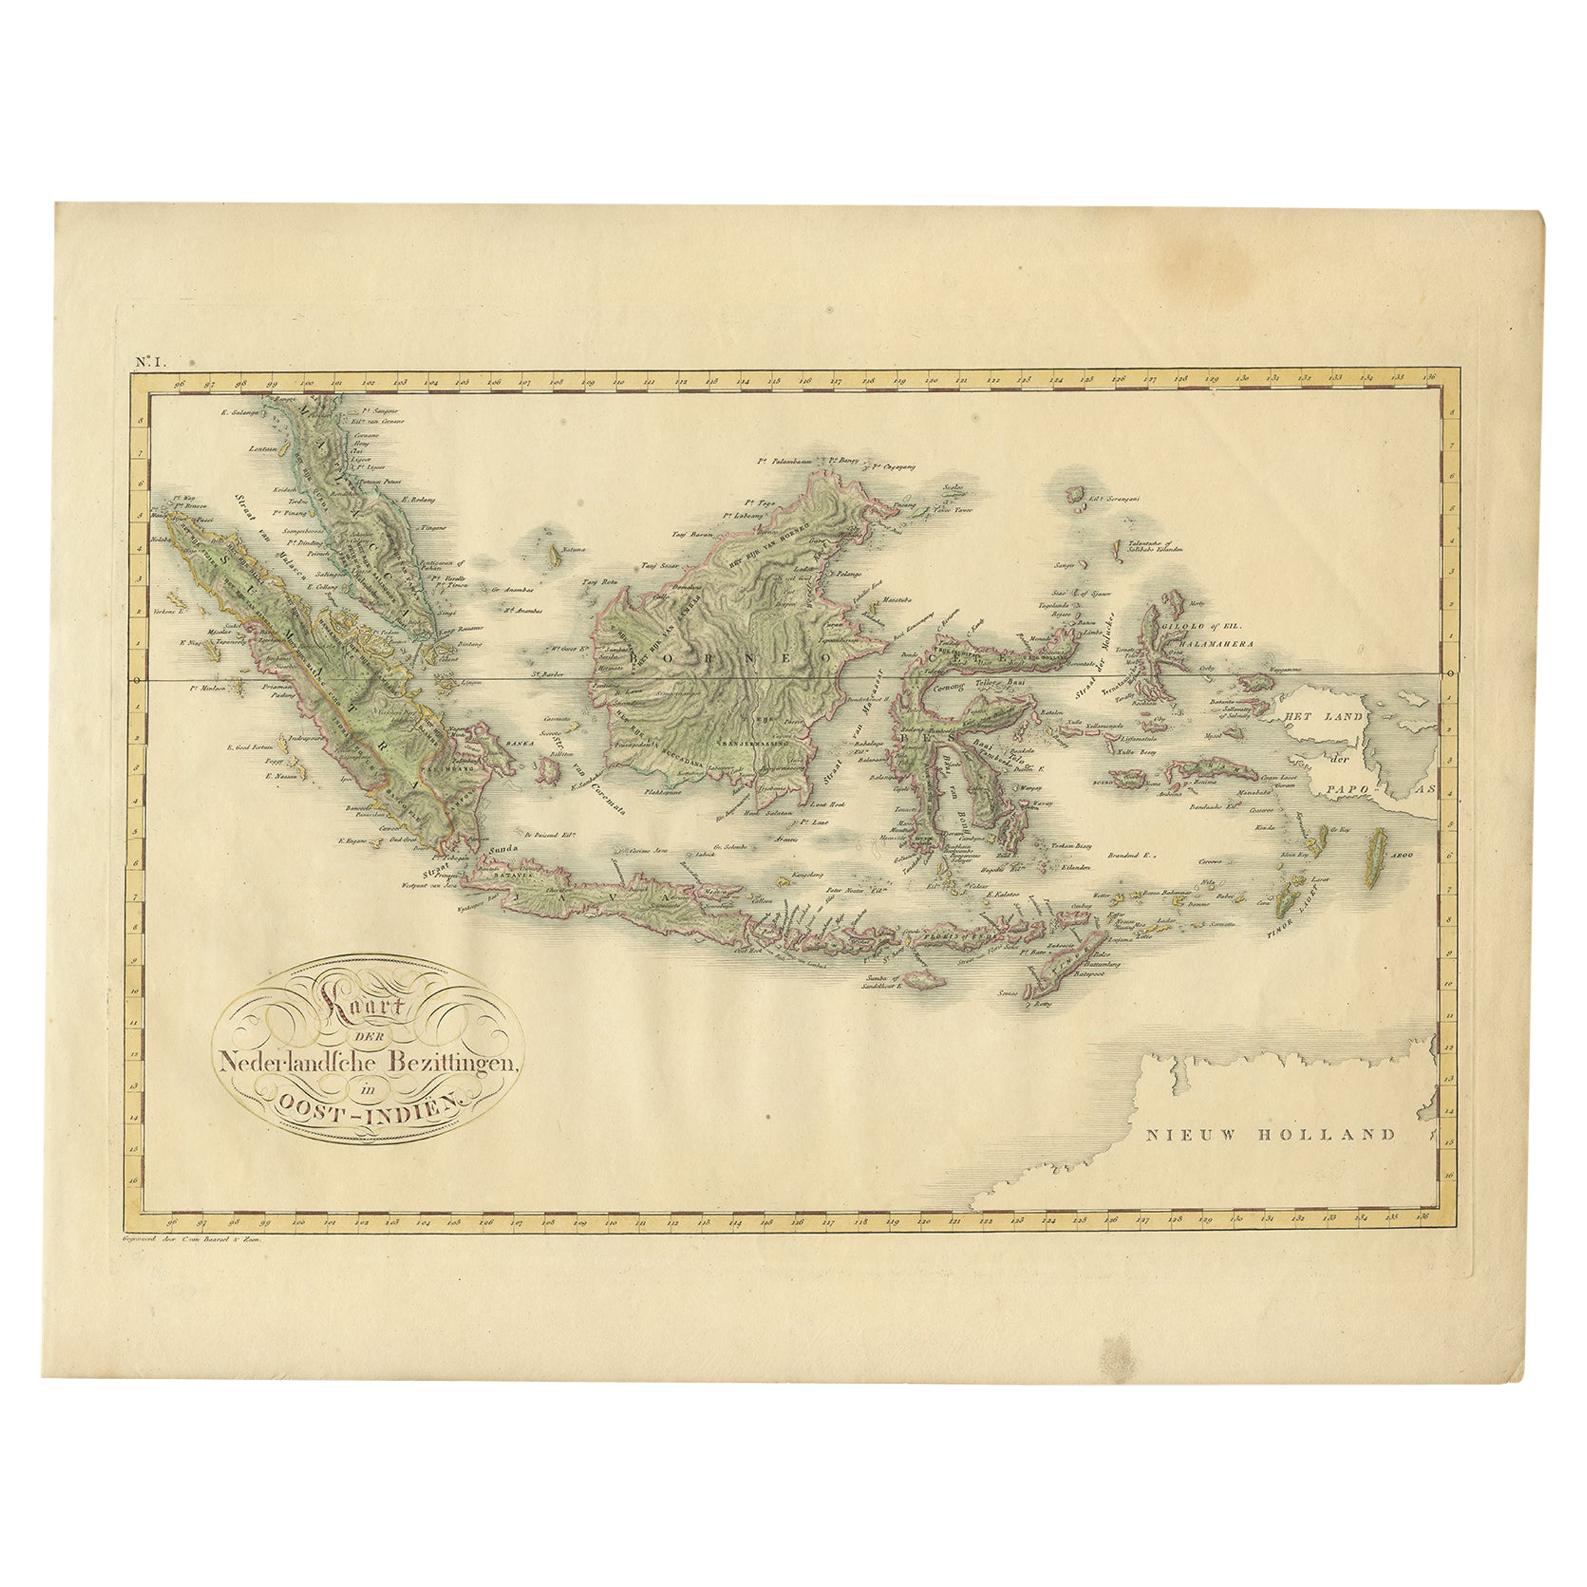 Antique Map of the Dutch East Indies by Van den Bosch '1818'